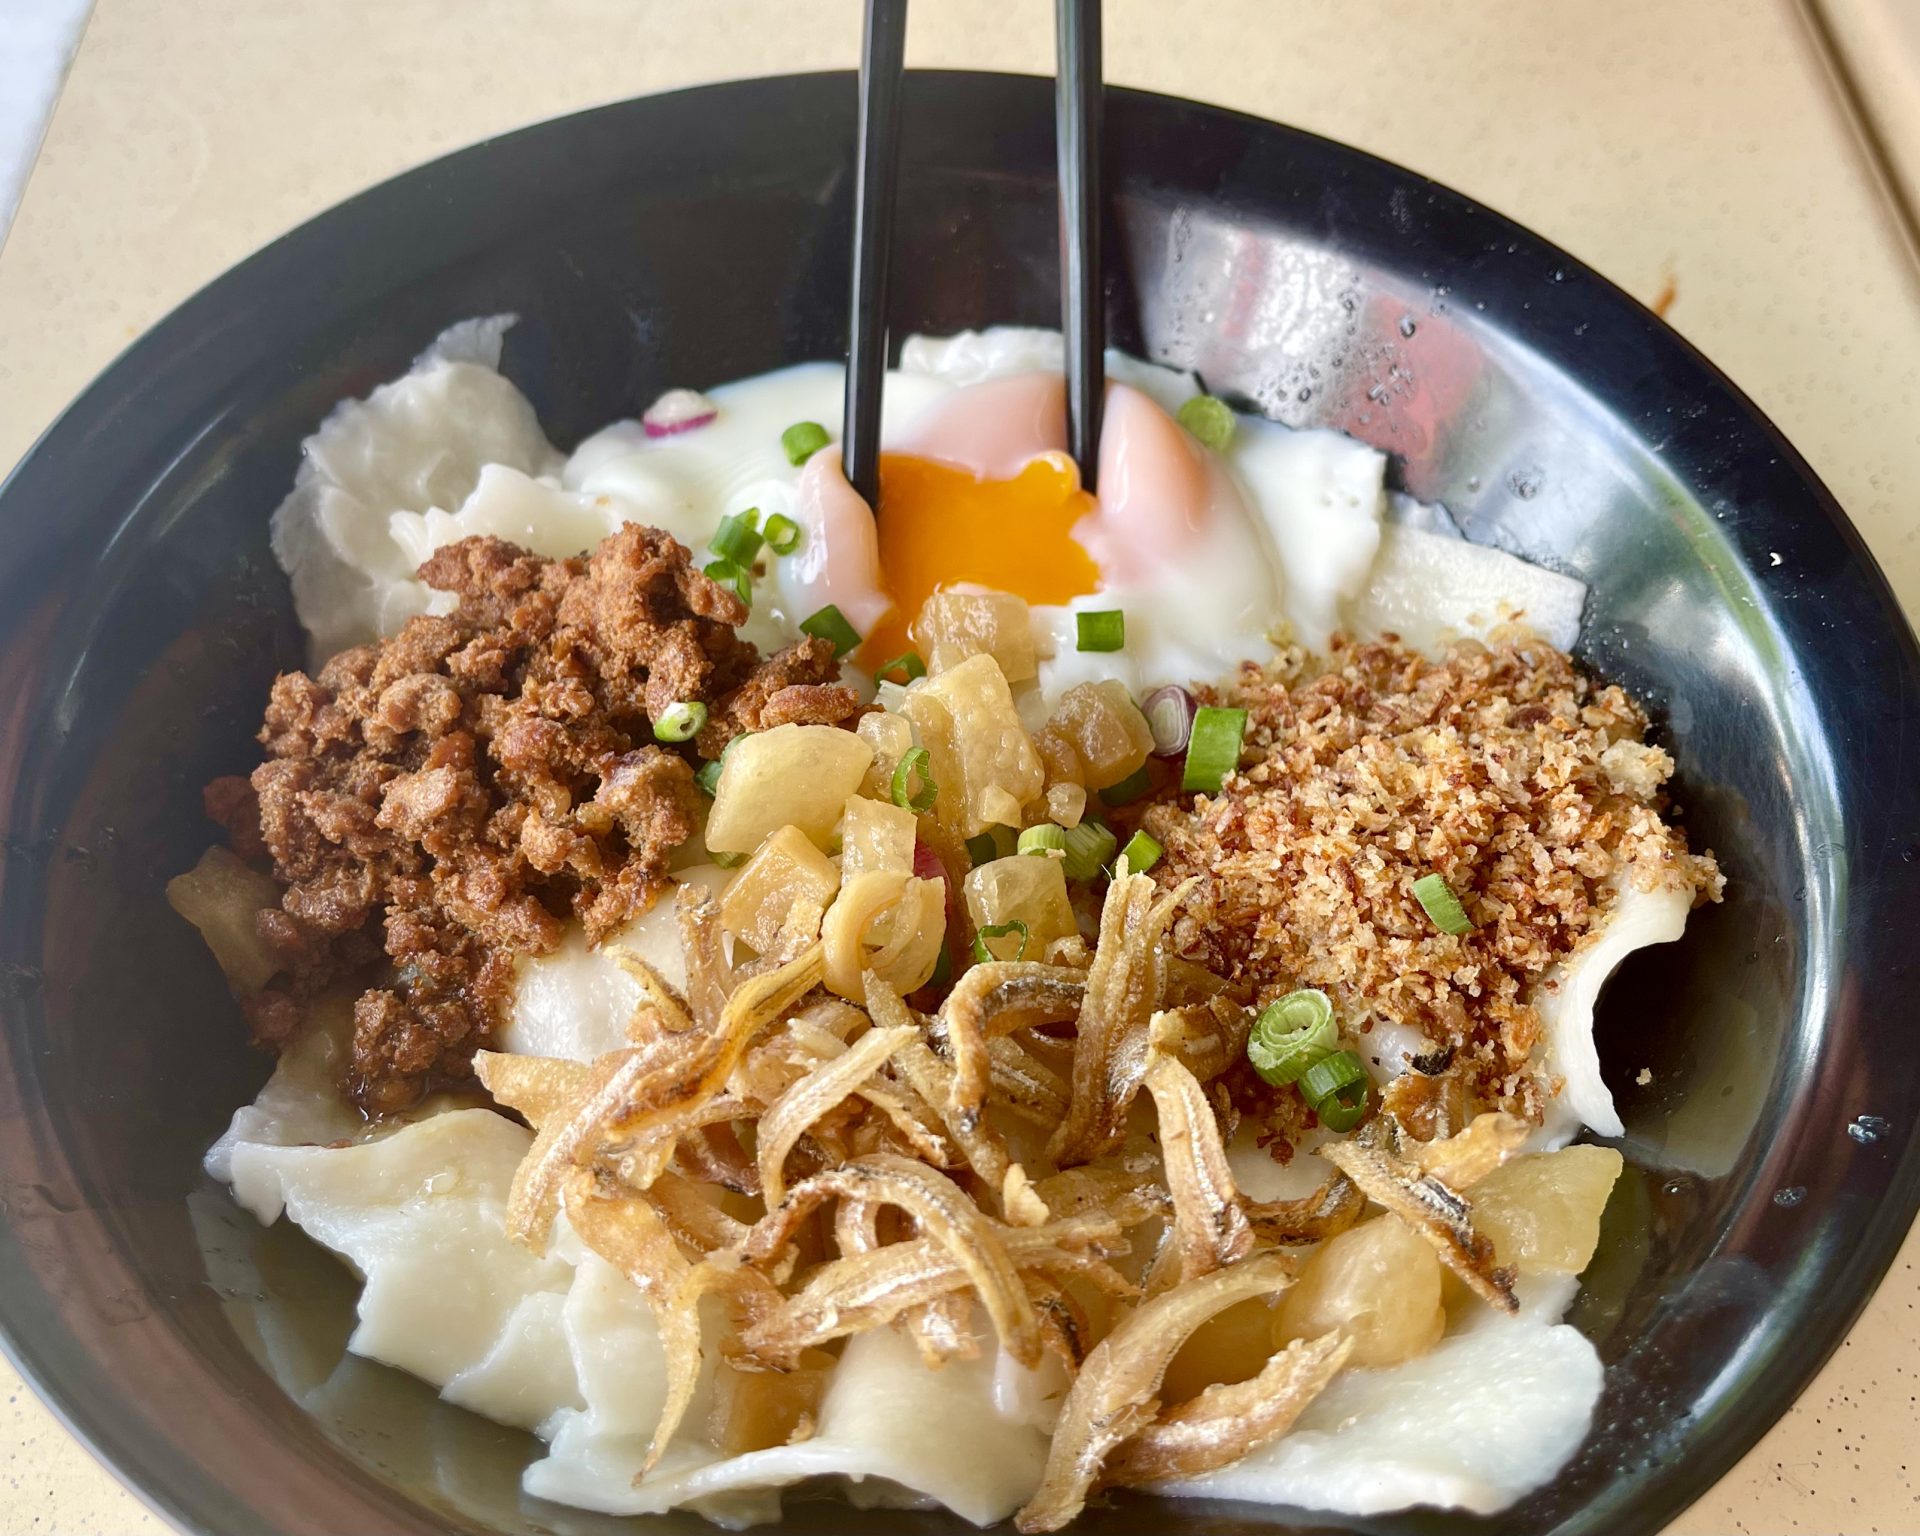 Penang Heng Heng Noodles - Breaking egg